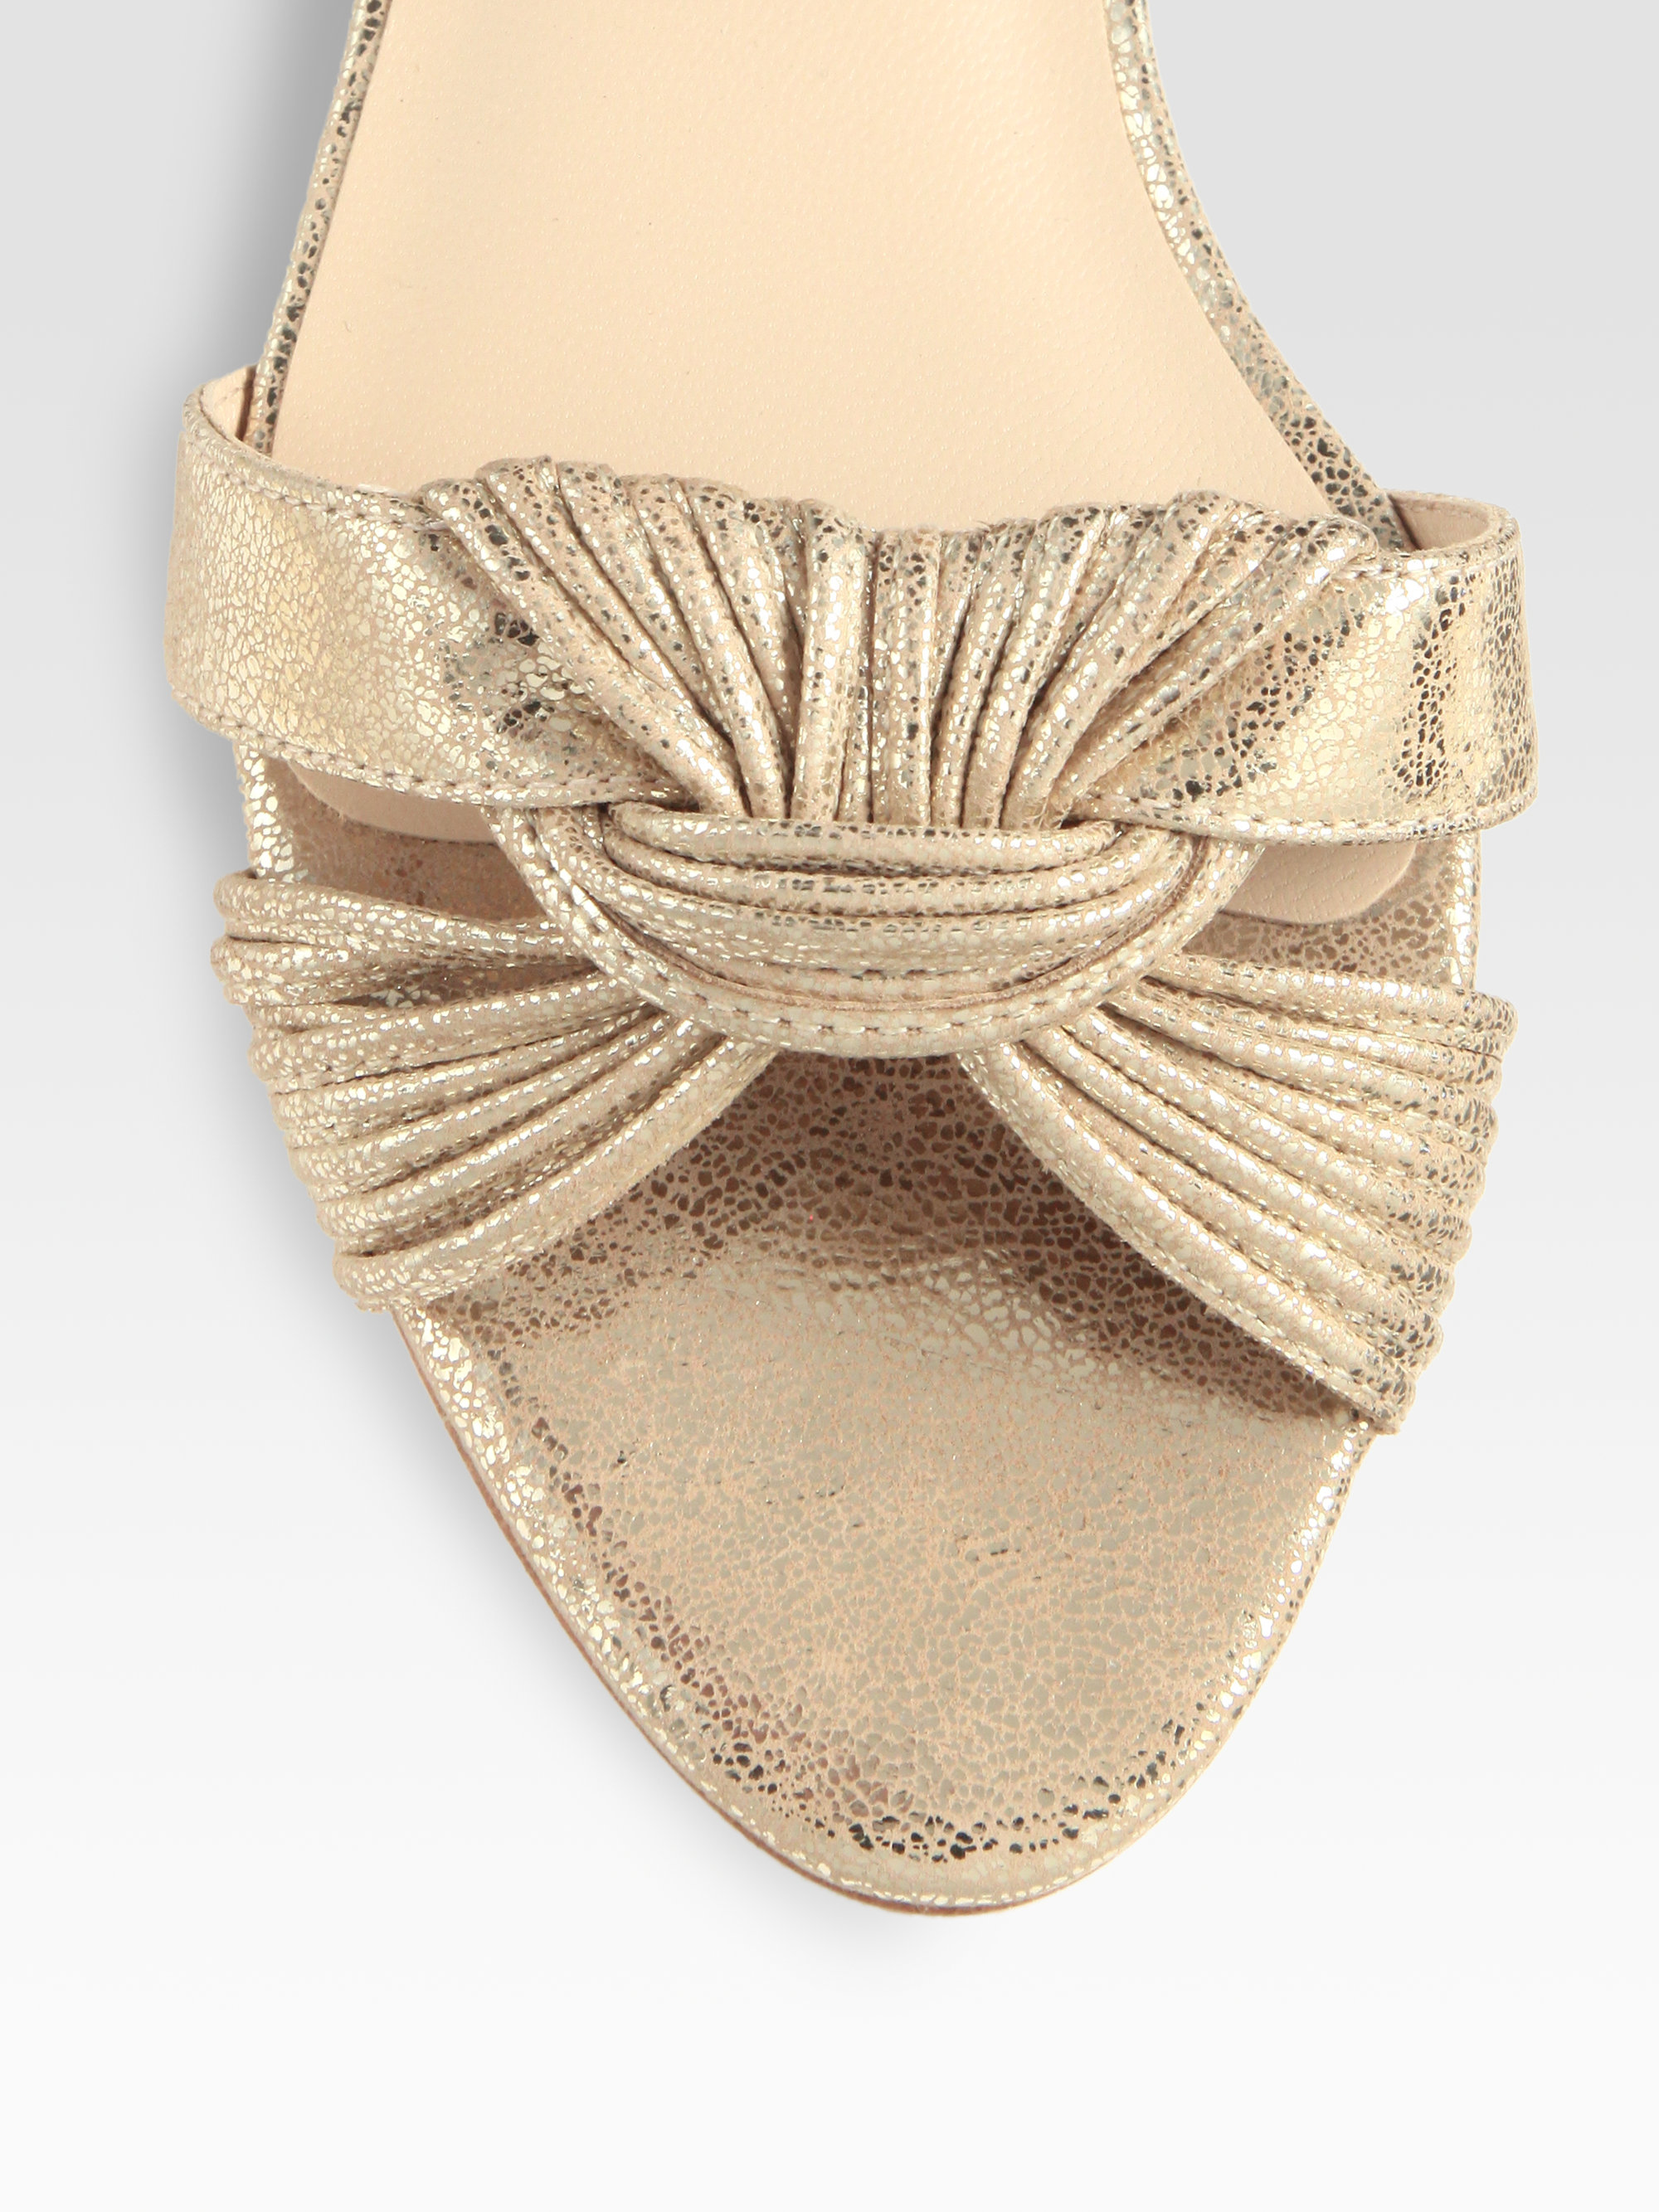 Lyst - Loeffler randall Luella Mignon Twist Metallic Leather Sandals